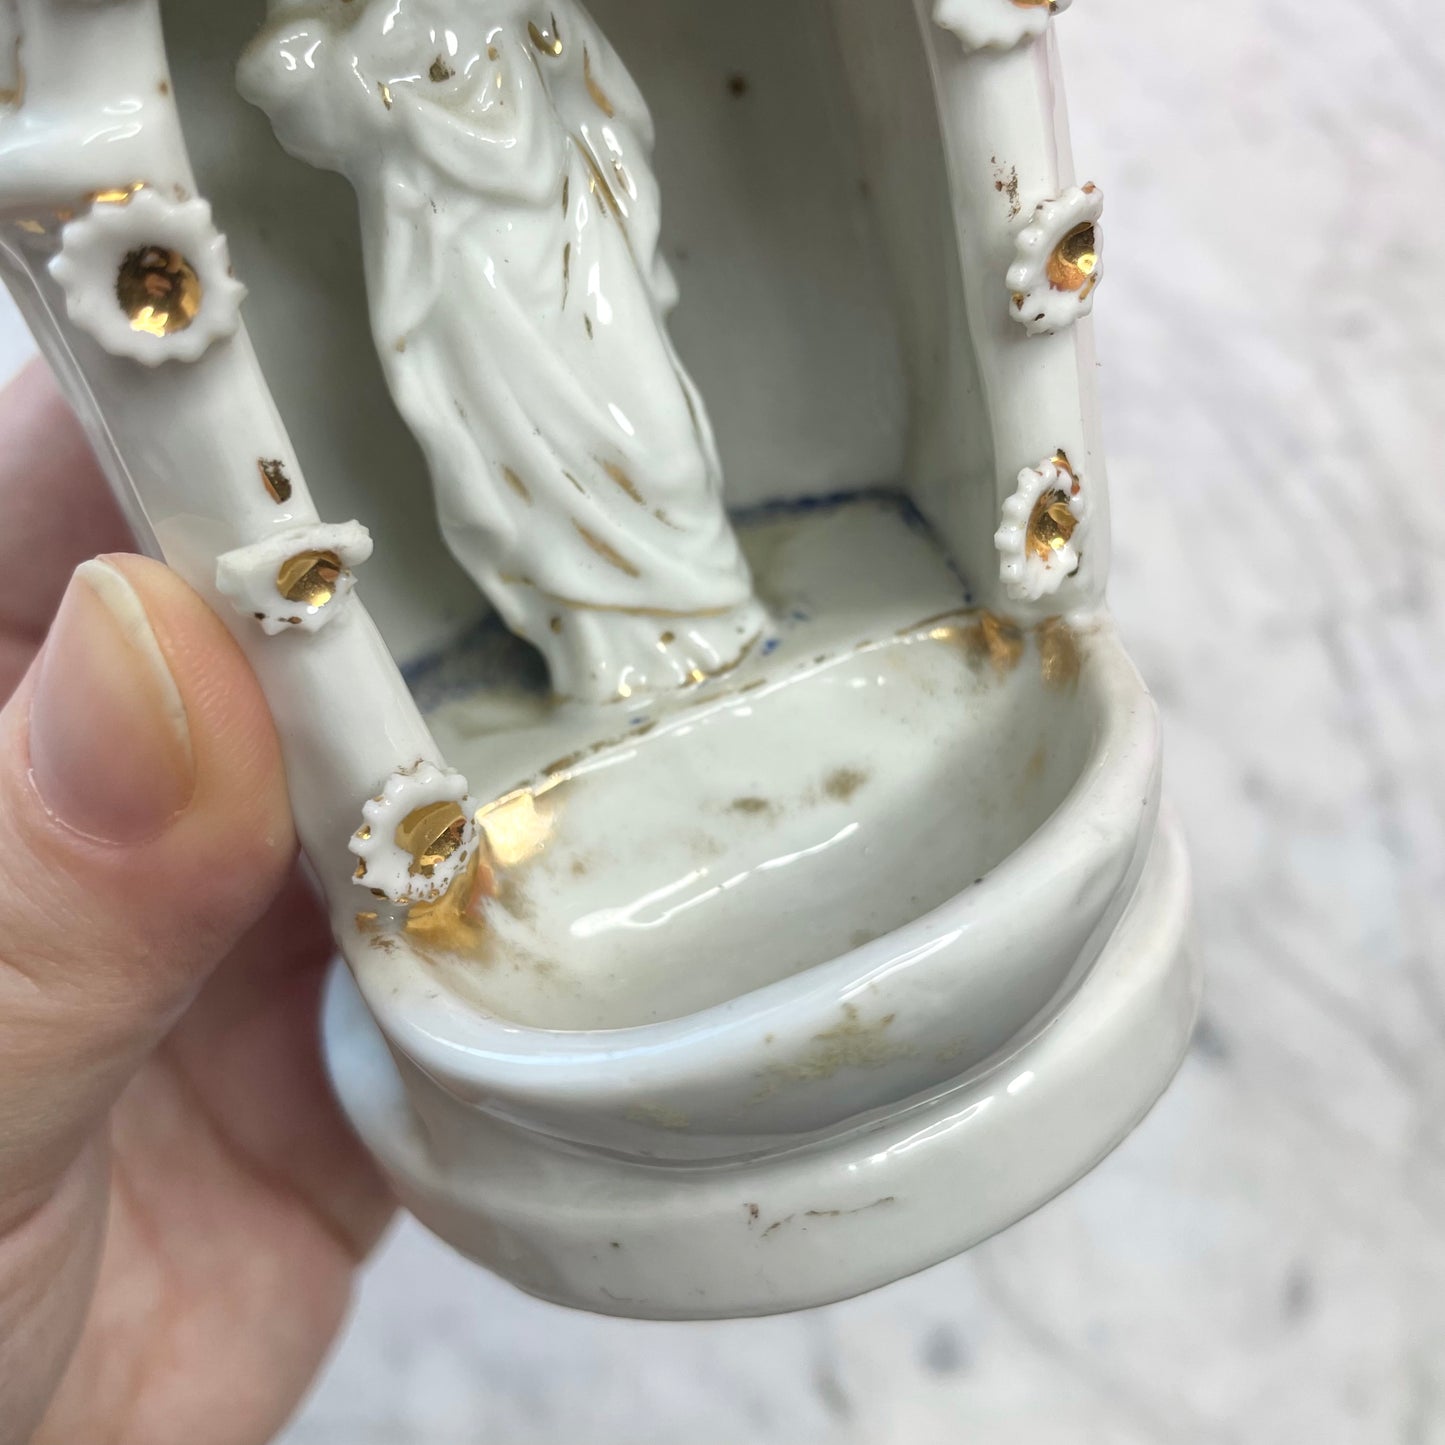 Victorian Porcelain Shrine Shaped Holy Water Font